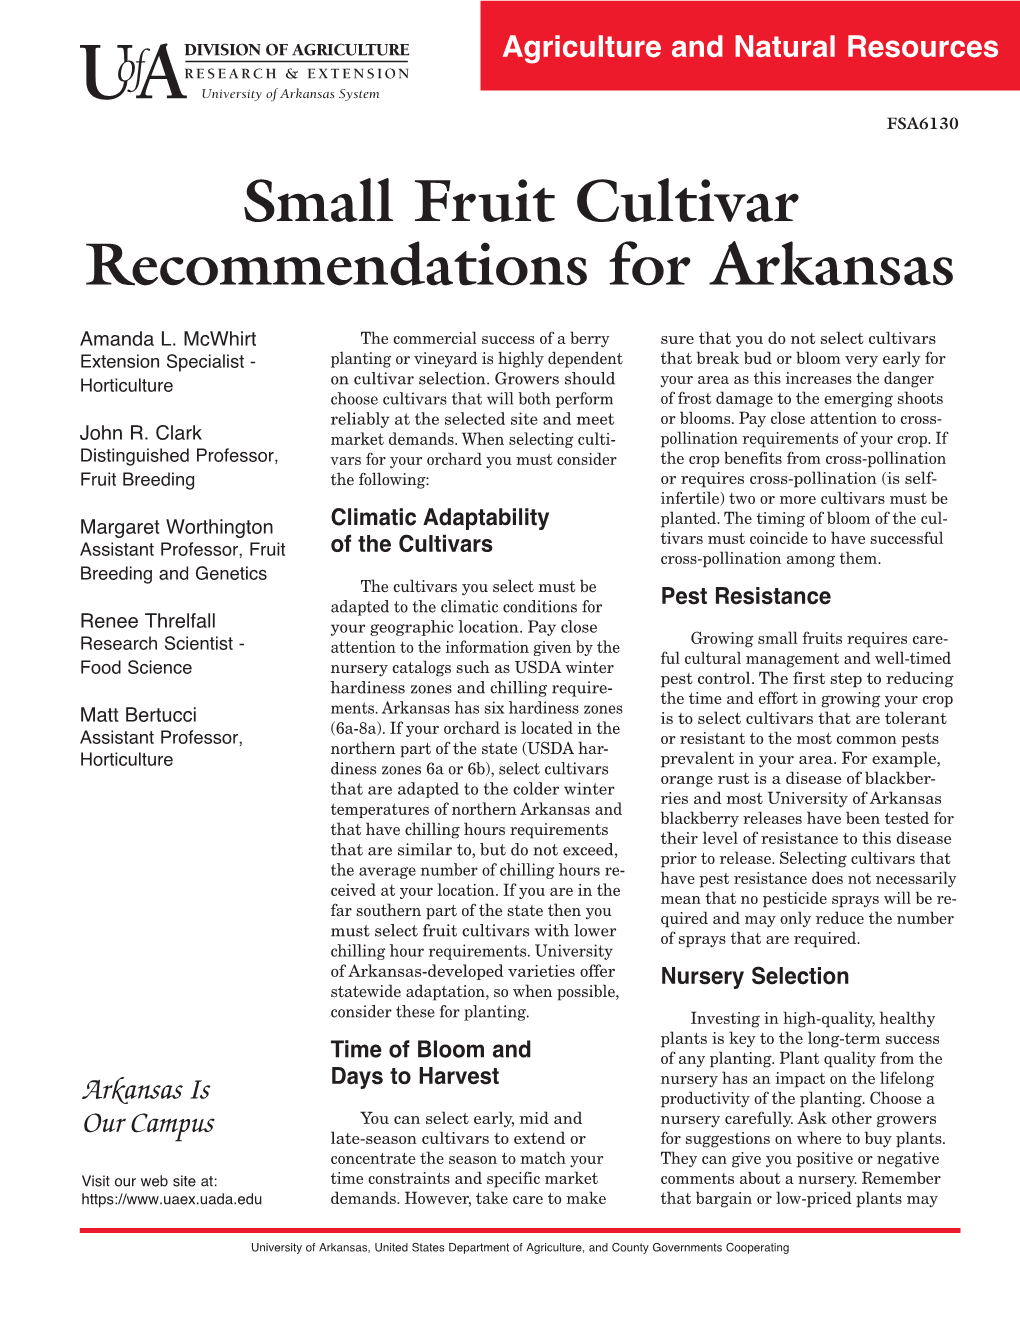 Small Fruit Cultivar Recommendations for Arkansas FSA6130